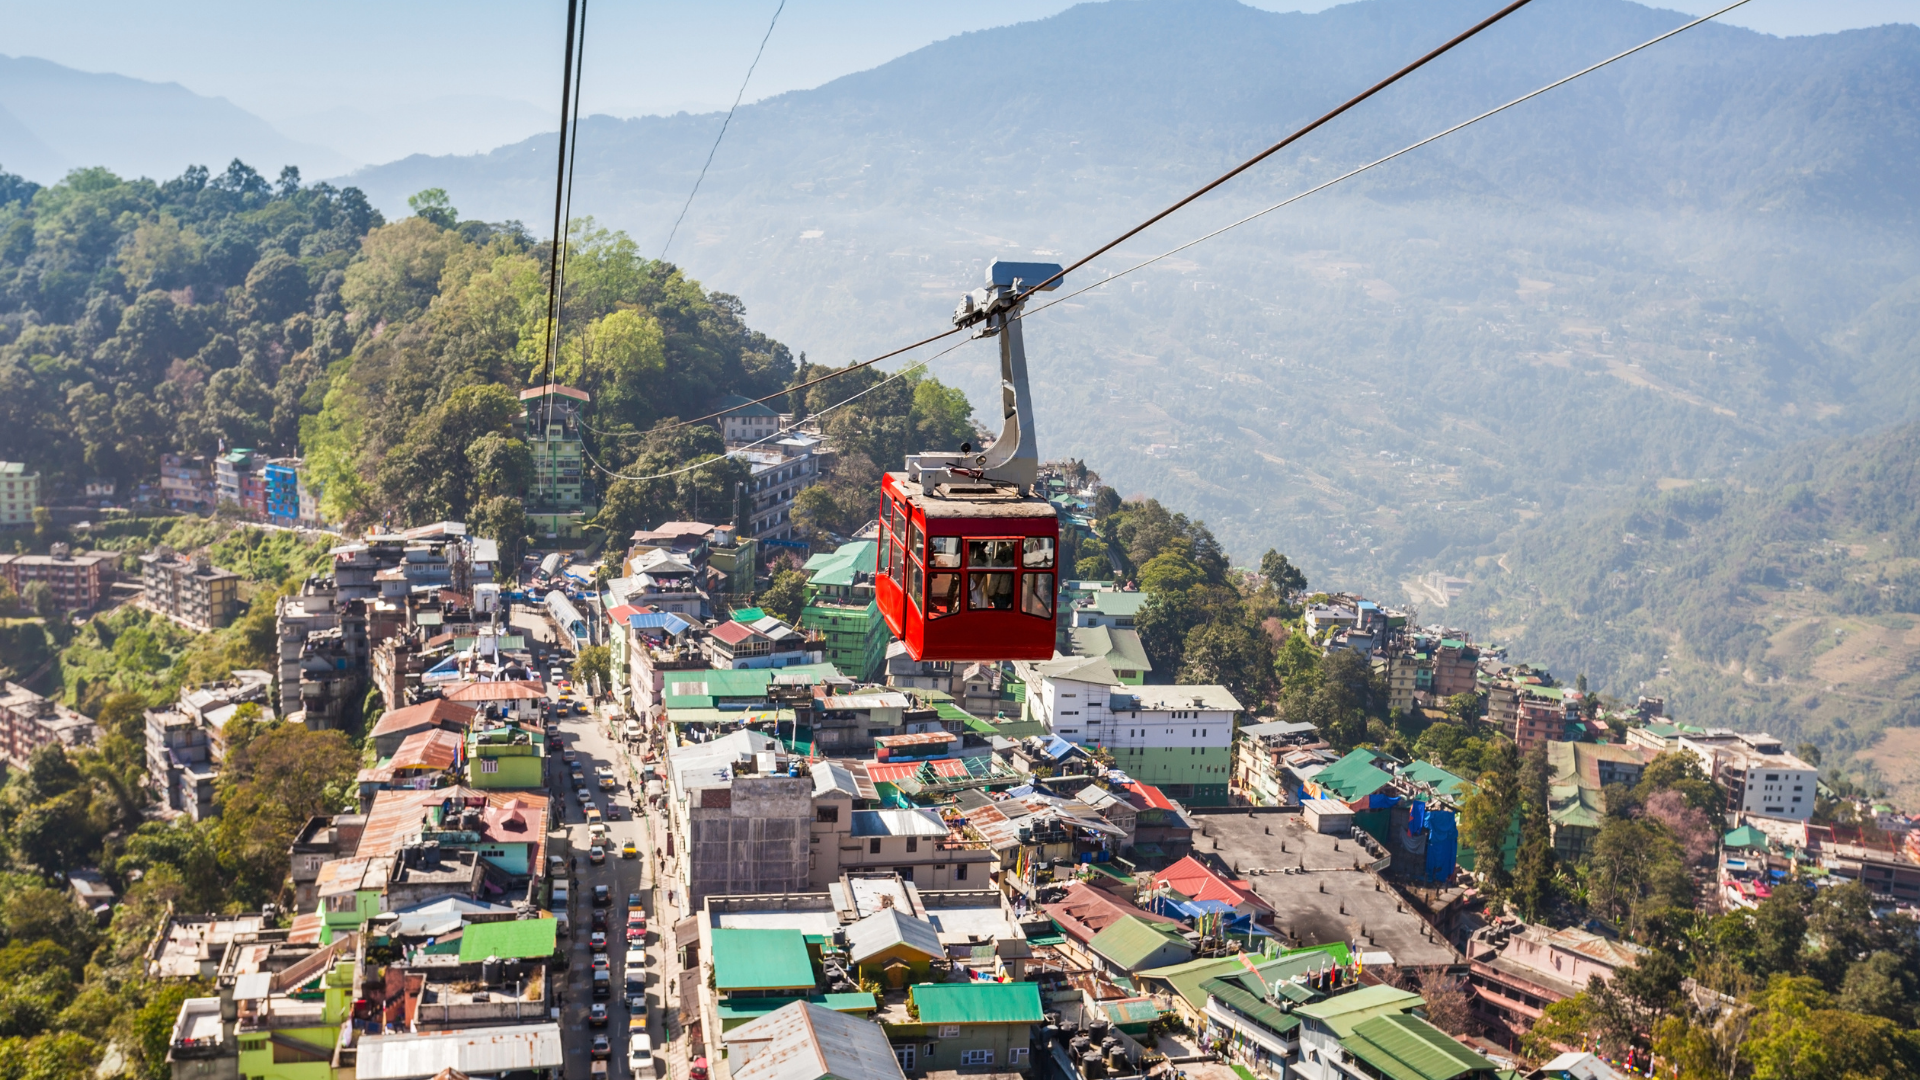 9. Gangtok, Sikkim